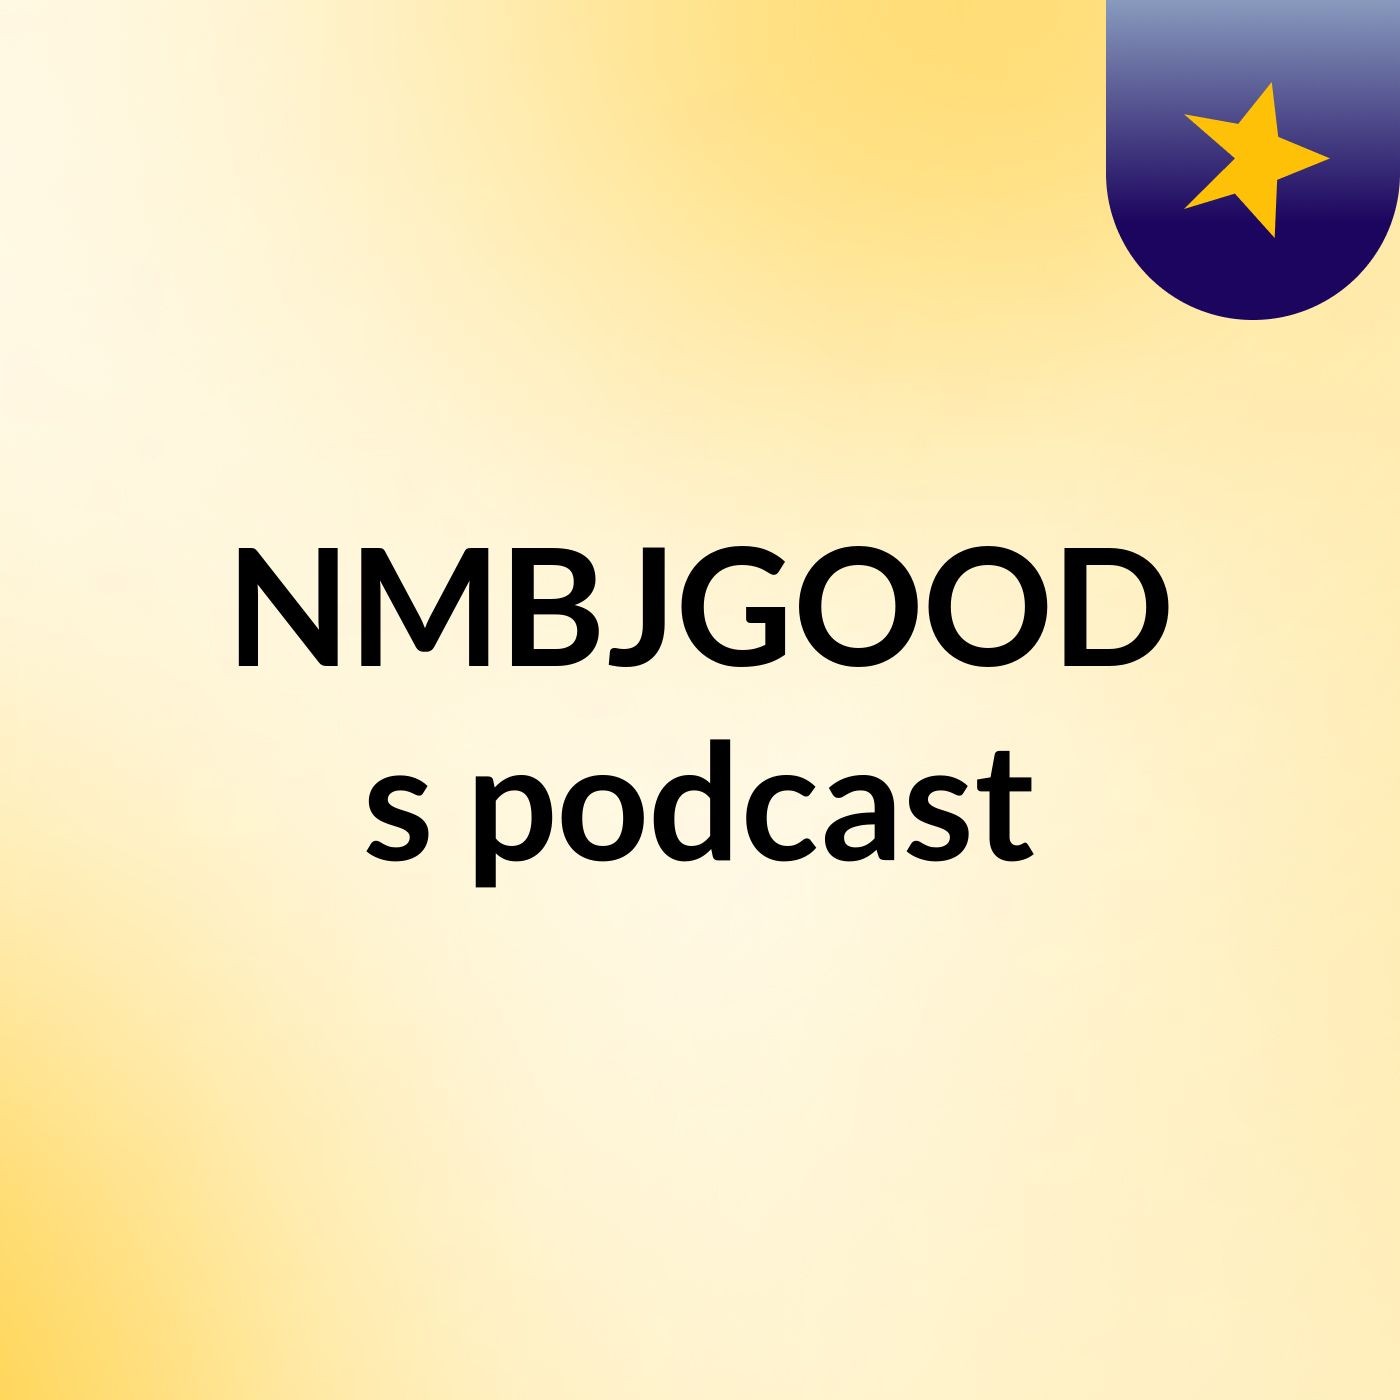 NMBJGOOD's podcast